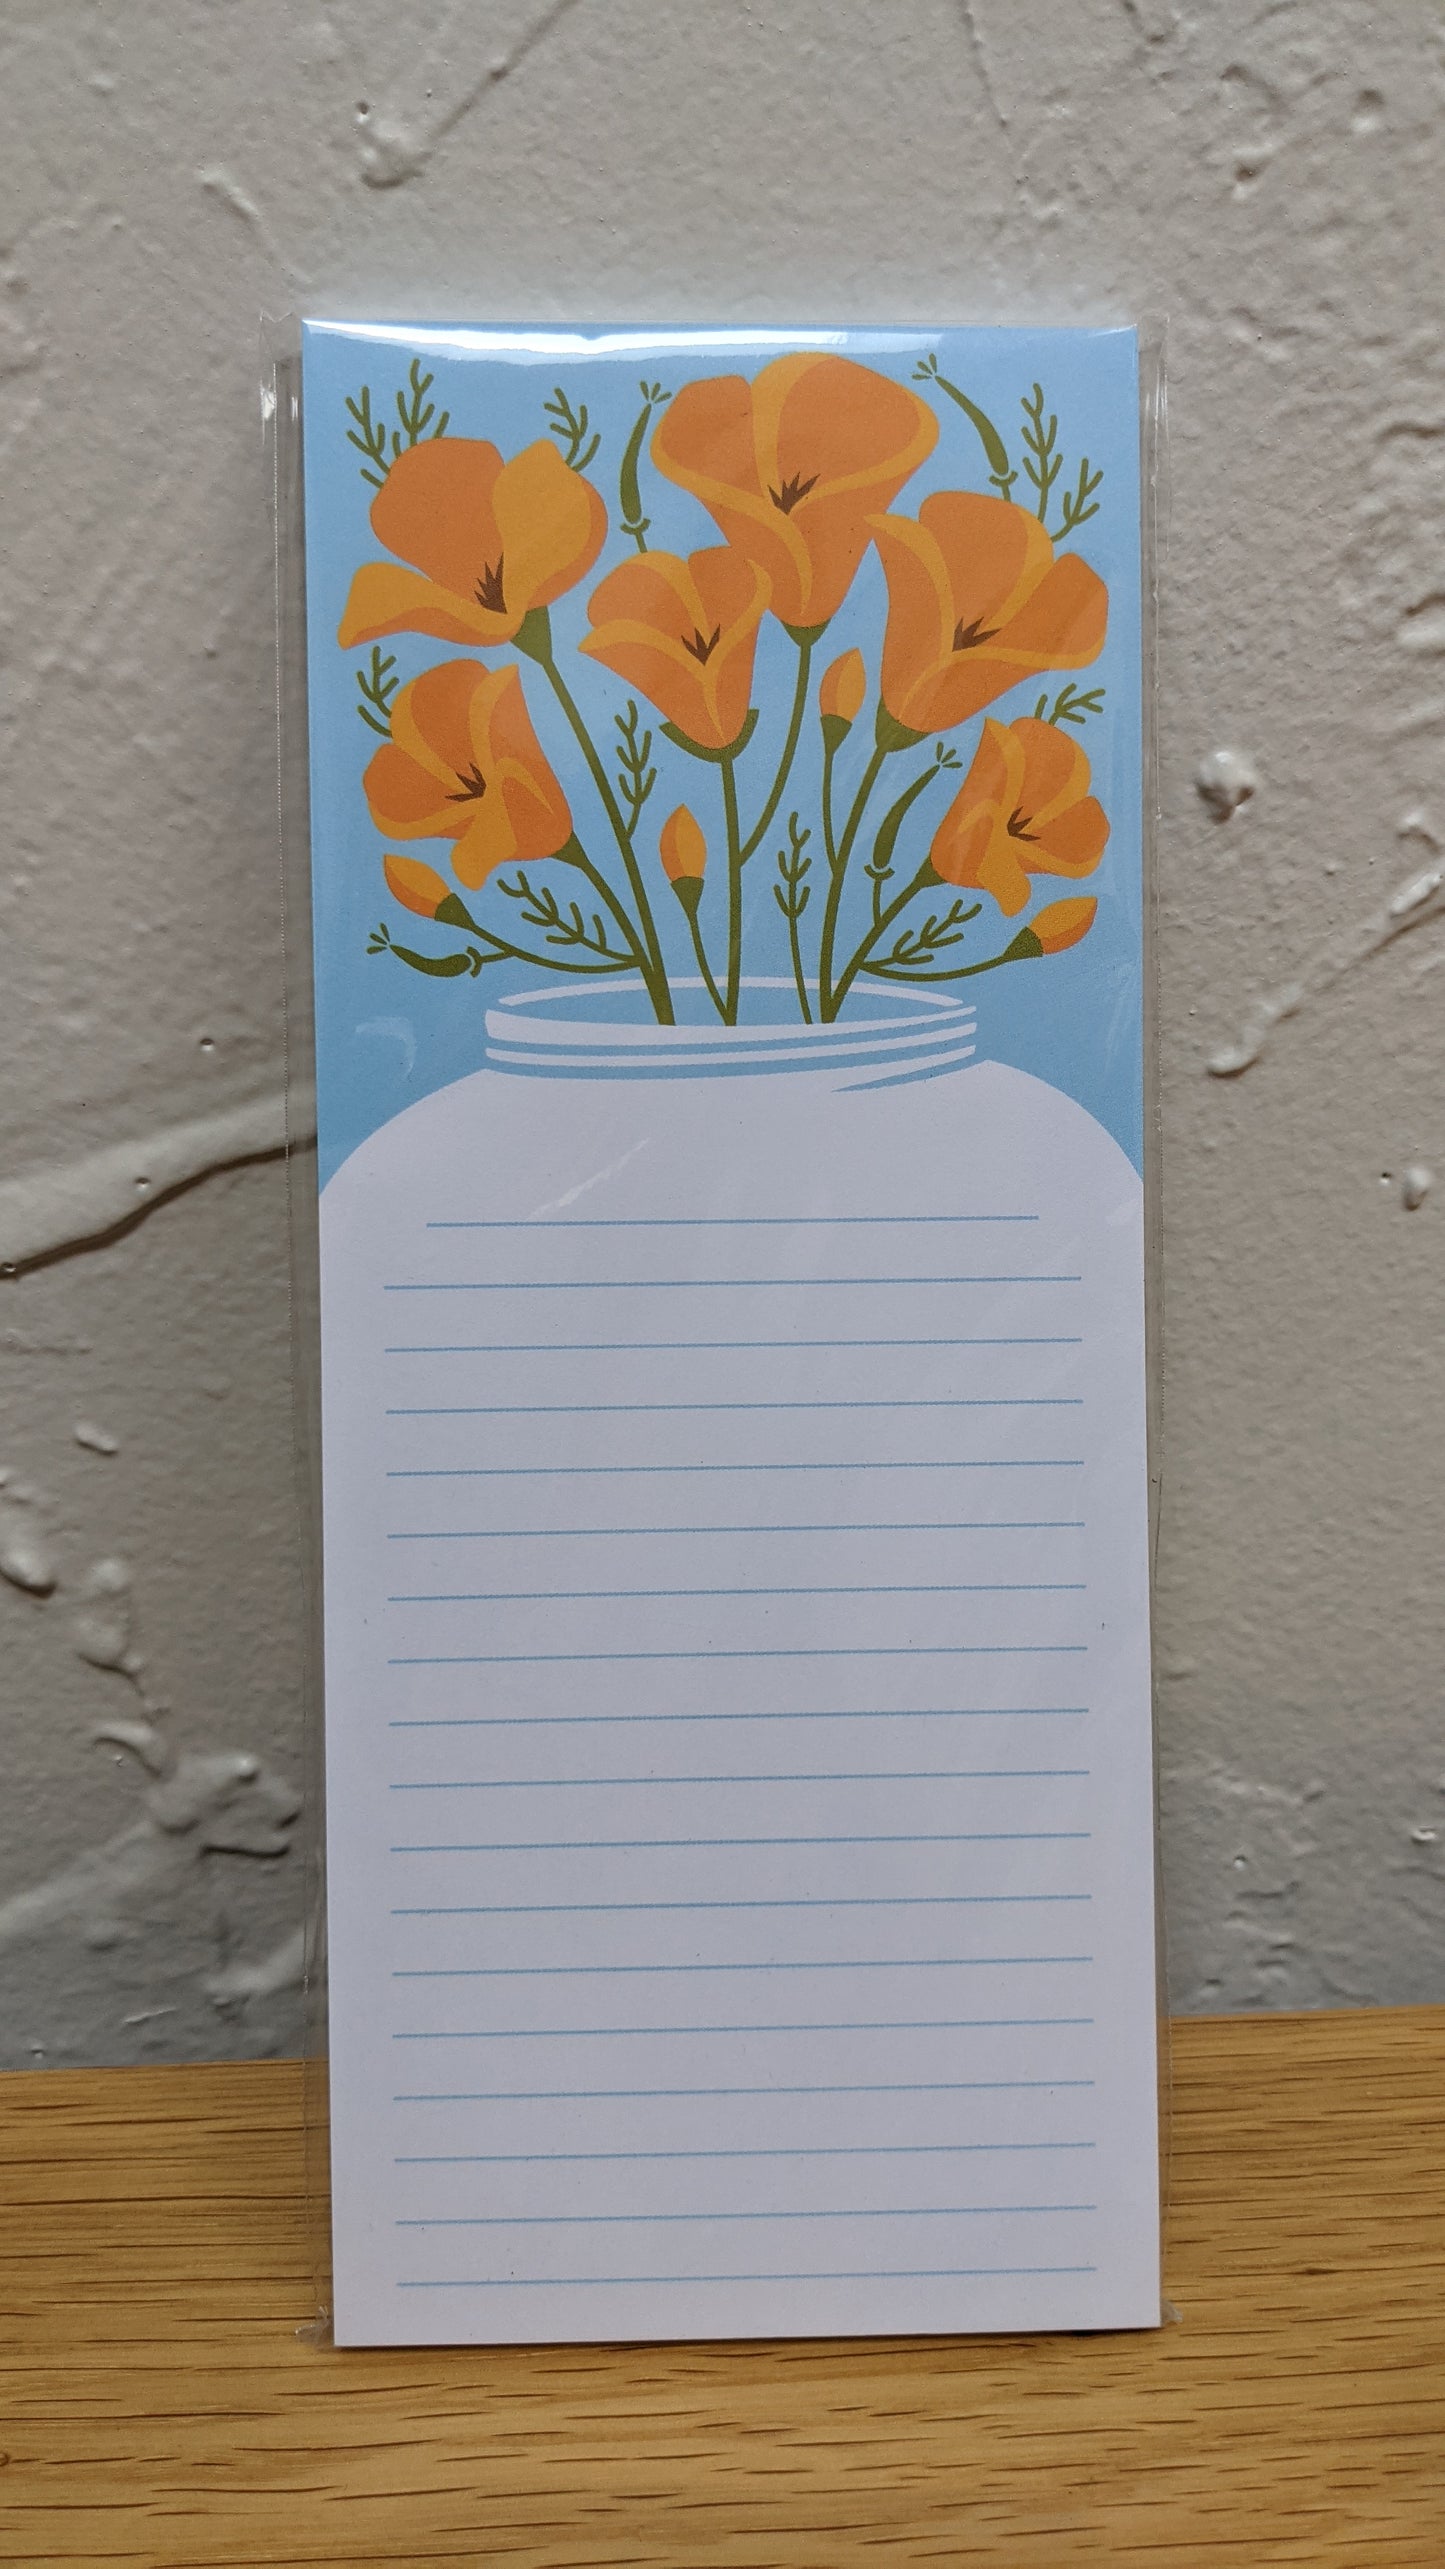 Poppy notepad with blue background by Poppy & Quail